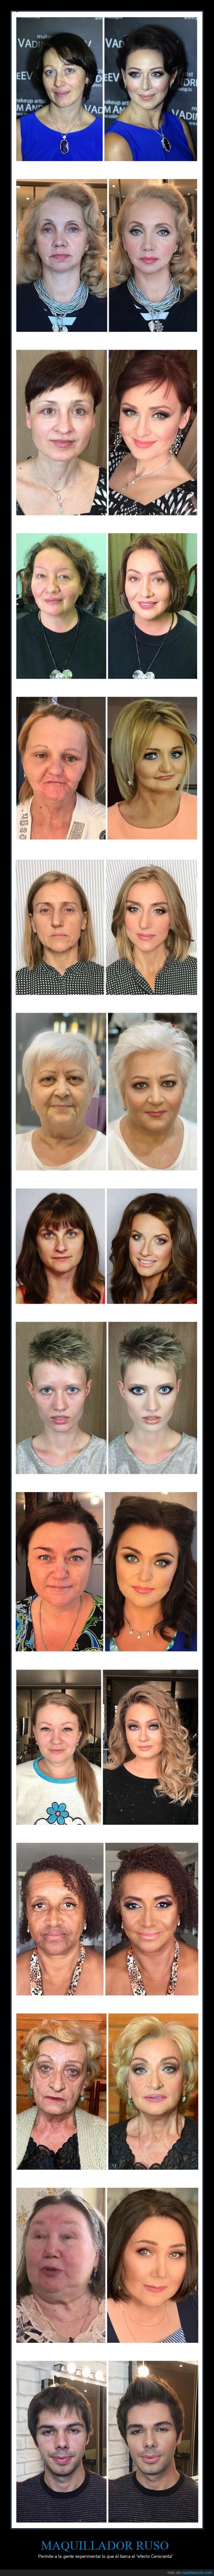 maquillaje,antes,después